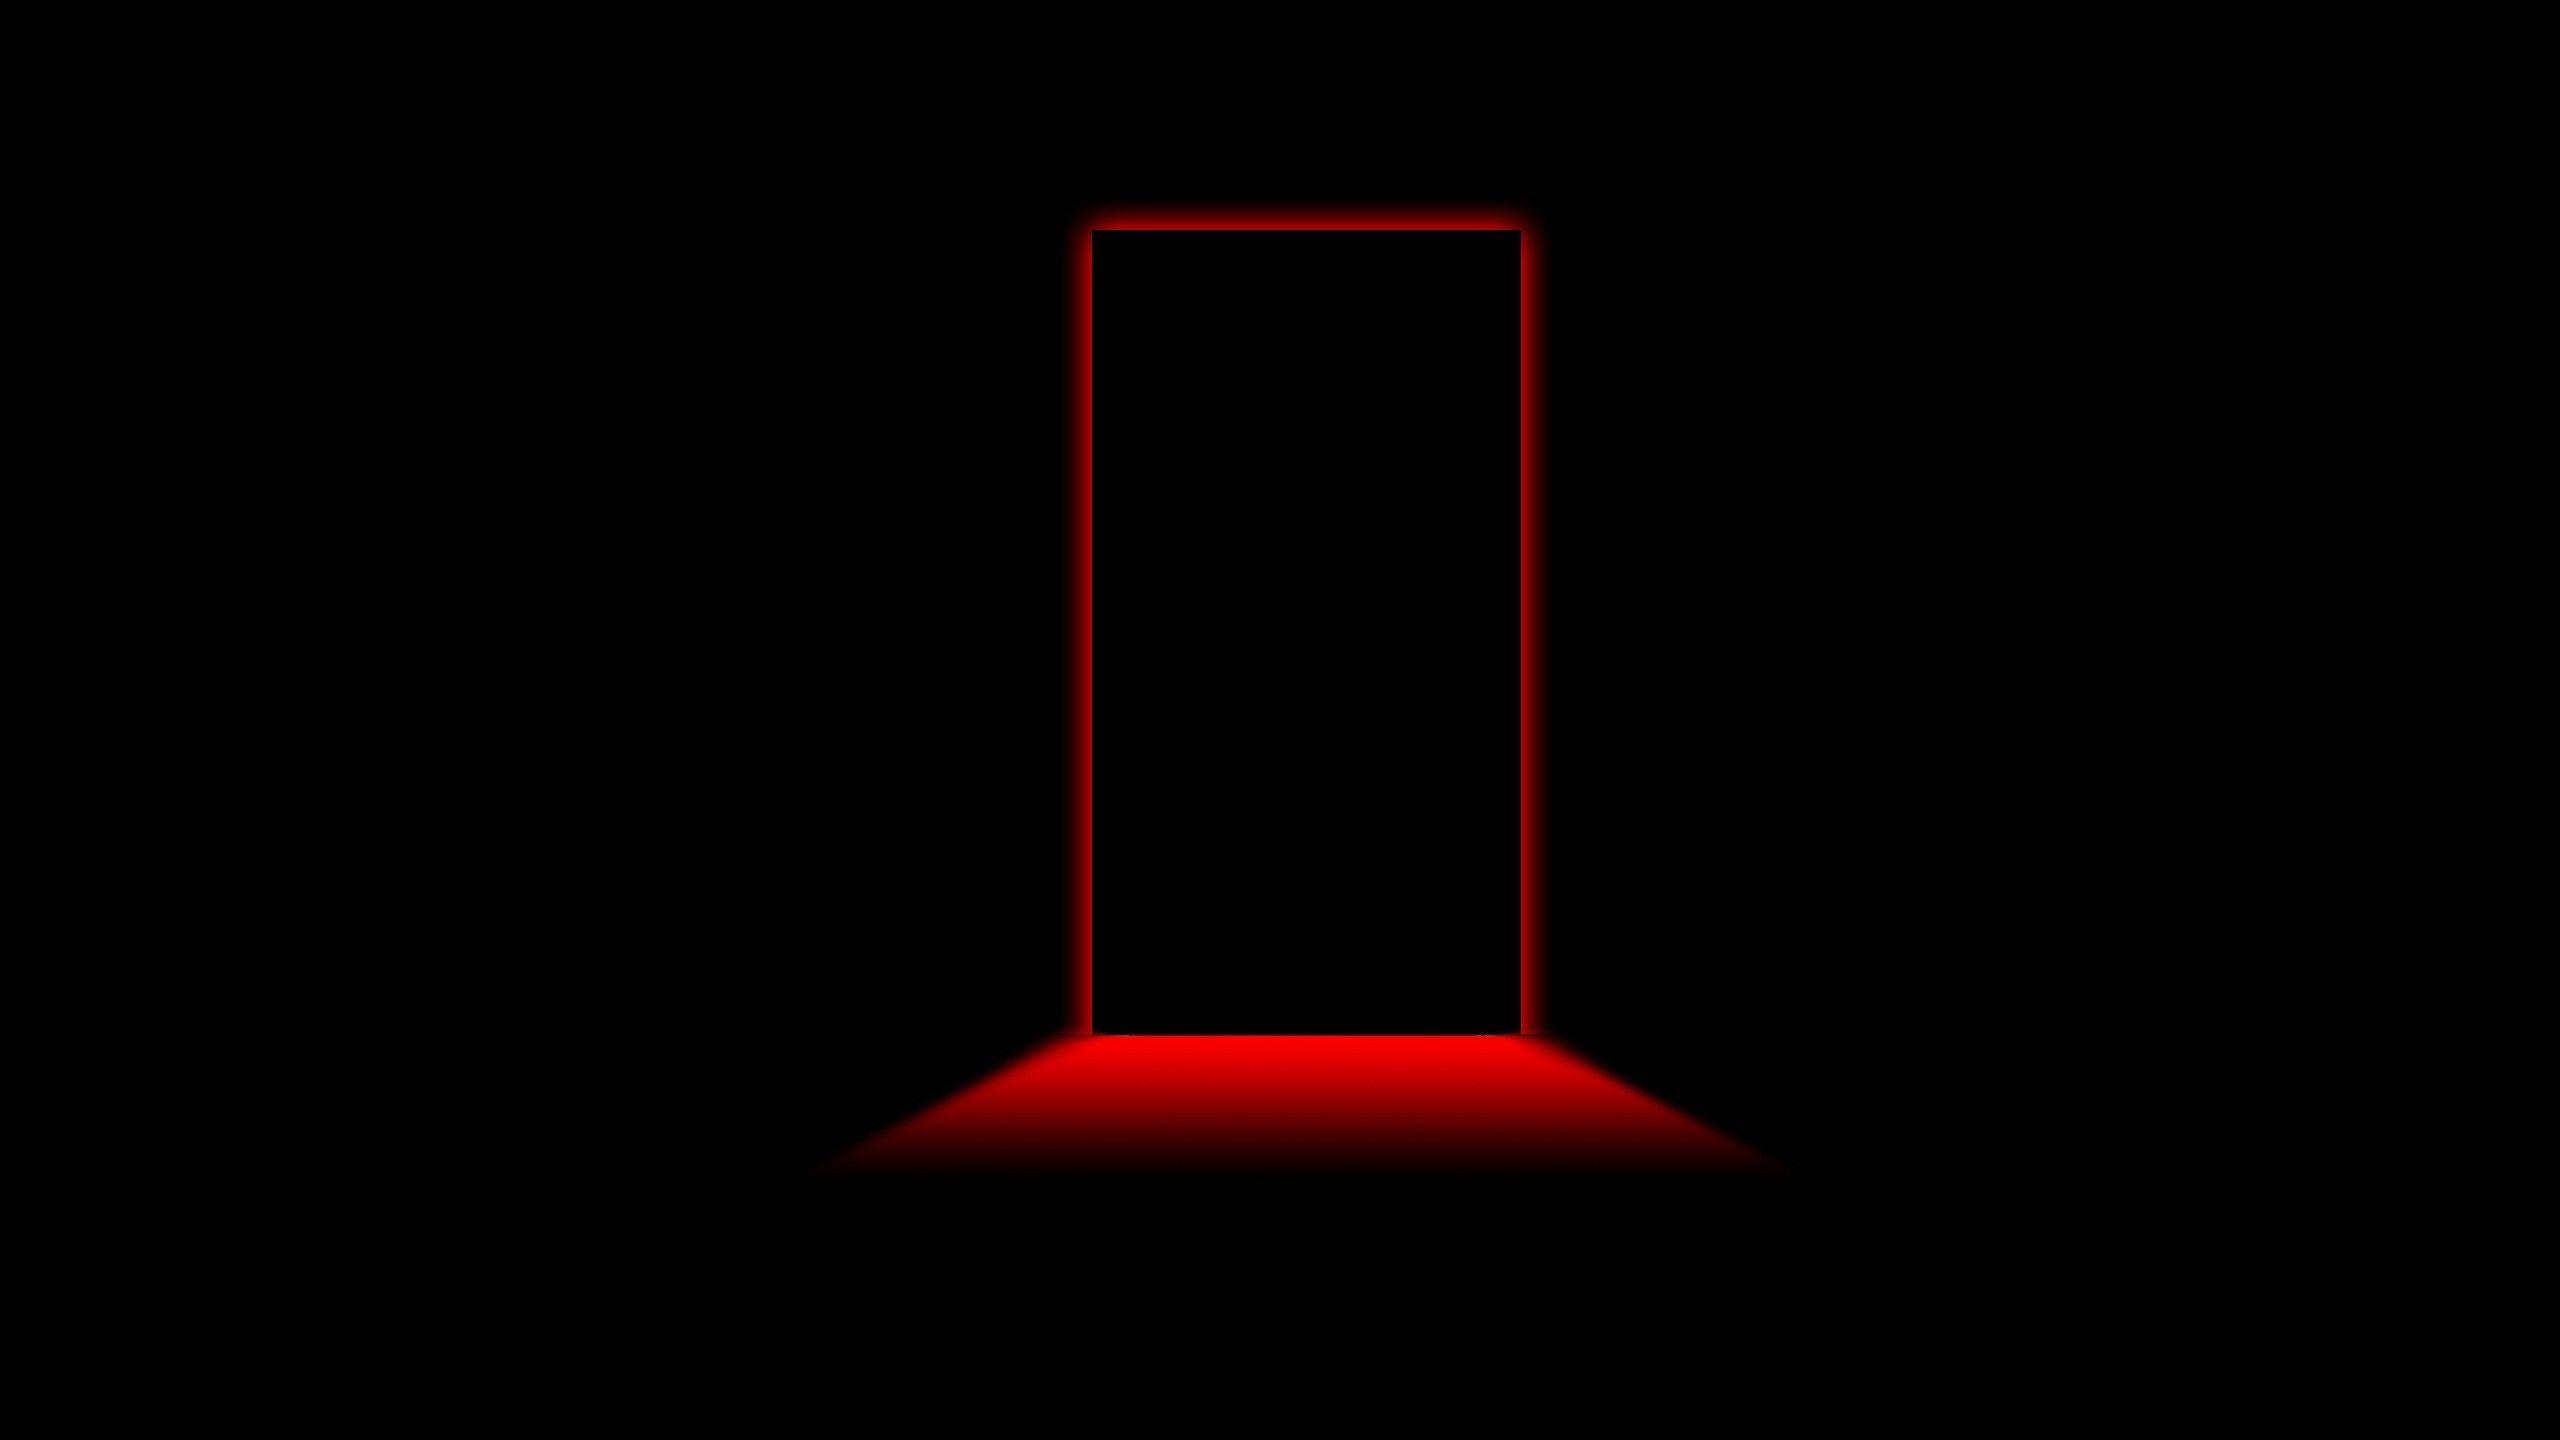 creepy, minimalistic, red, red light, black background, doors